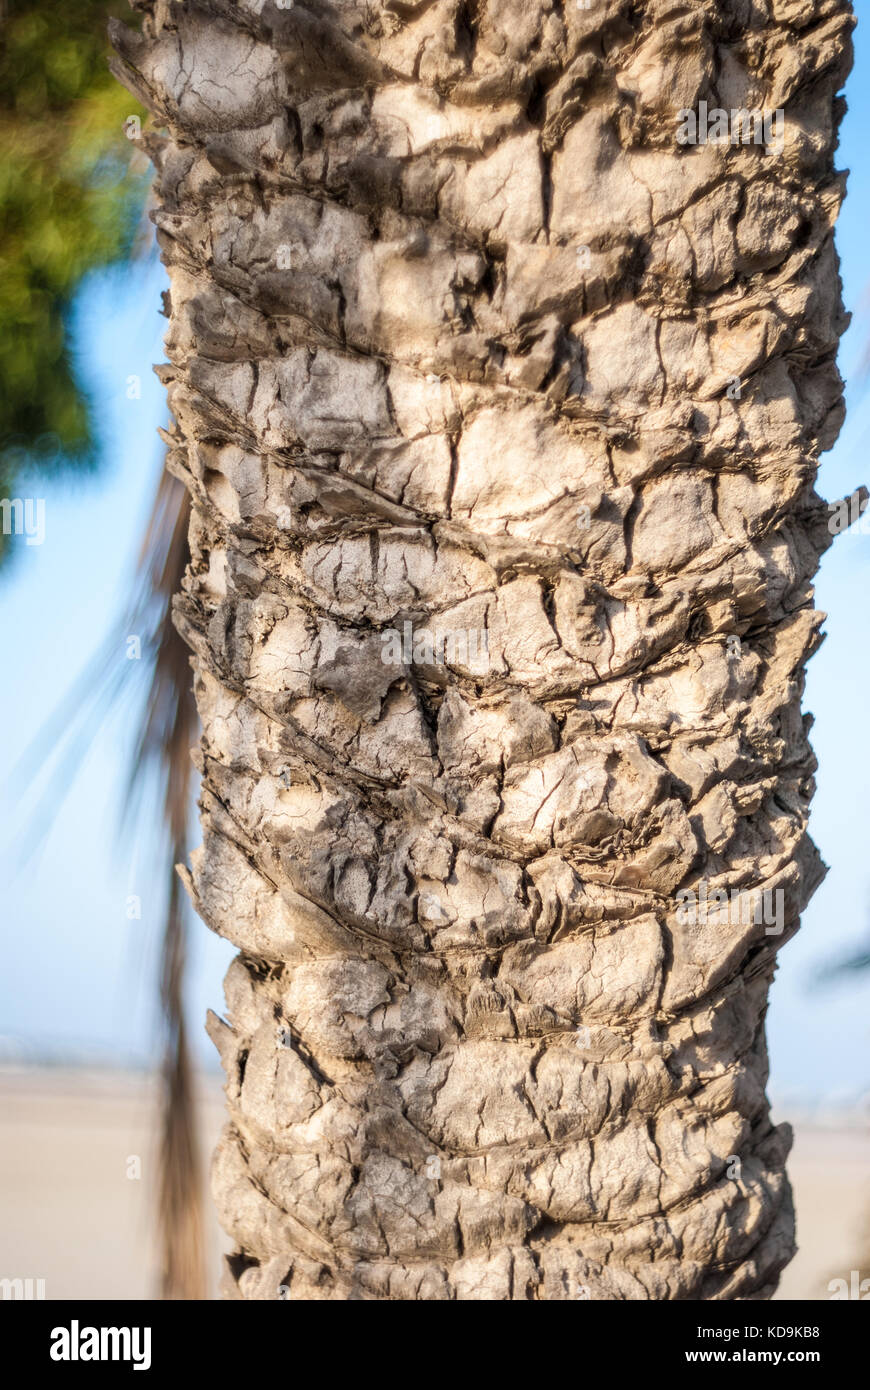 Date palm tree trunk Stock Photo - Alamy